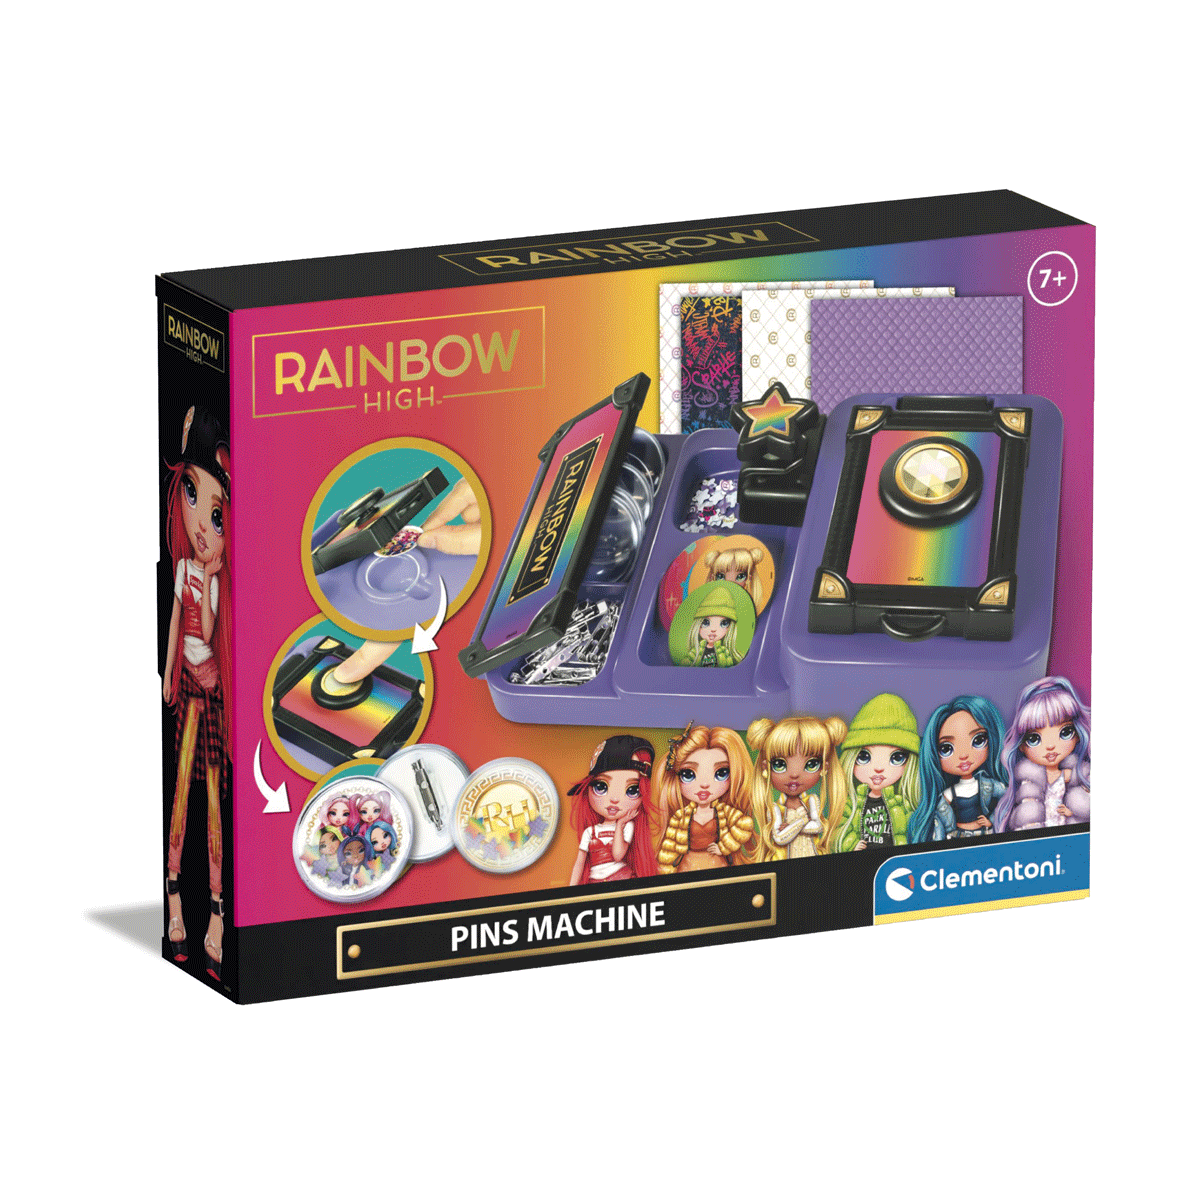 Clementoni - rainbow high - pins machine, gioco creativo - 